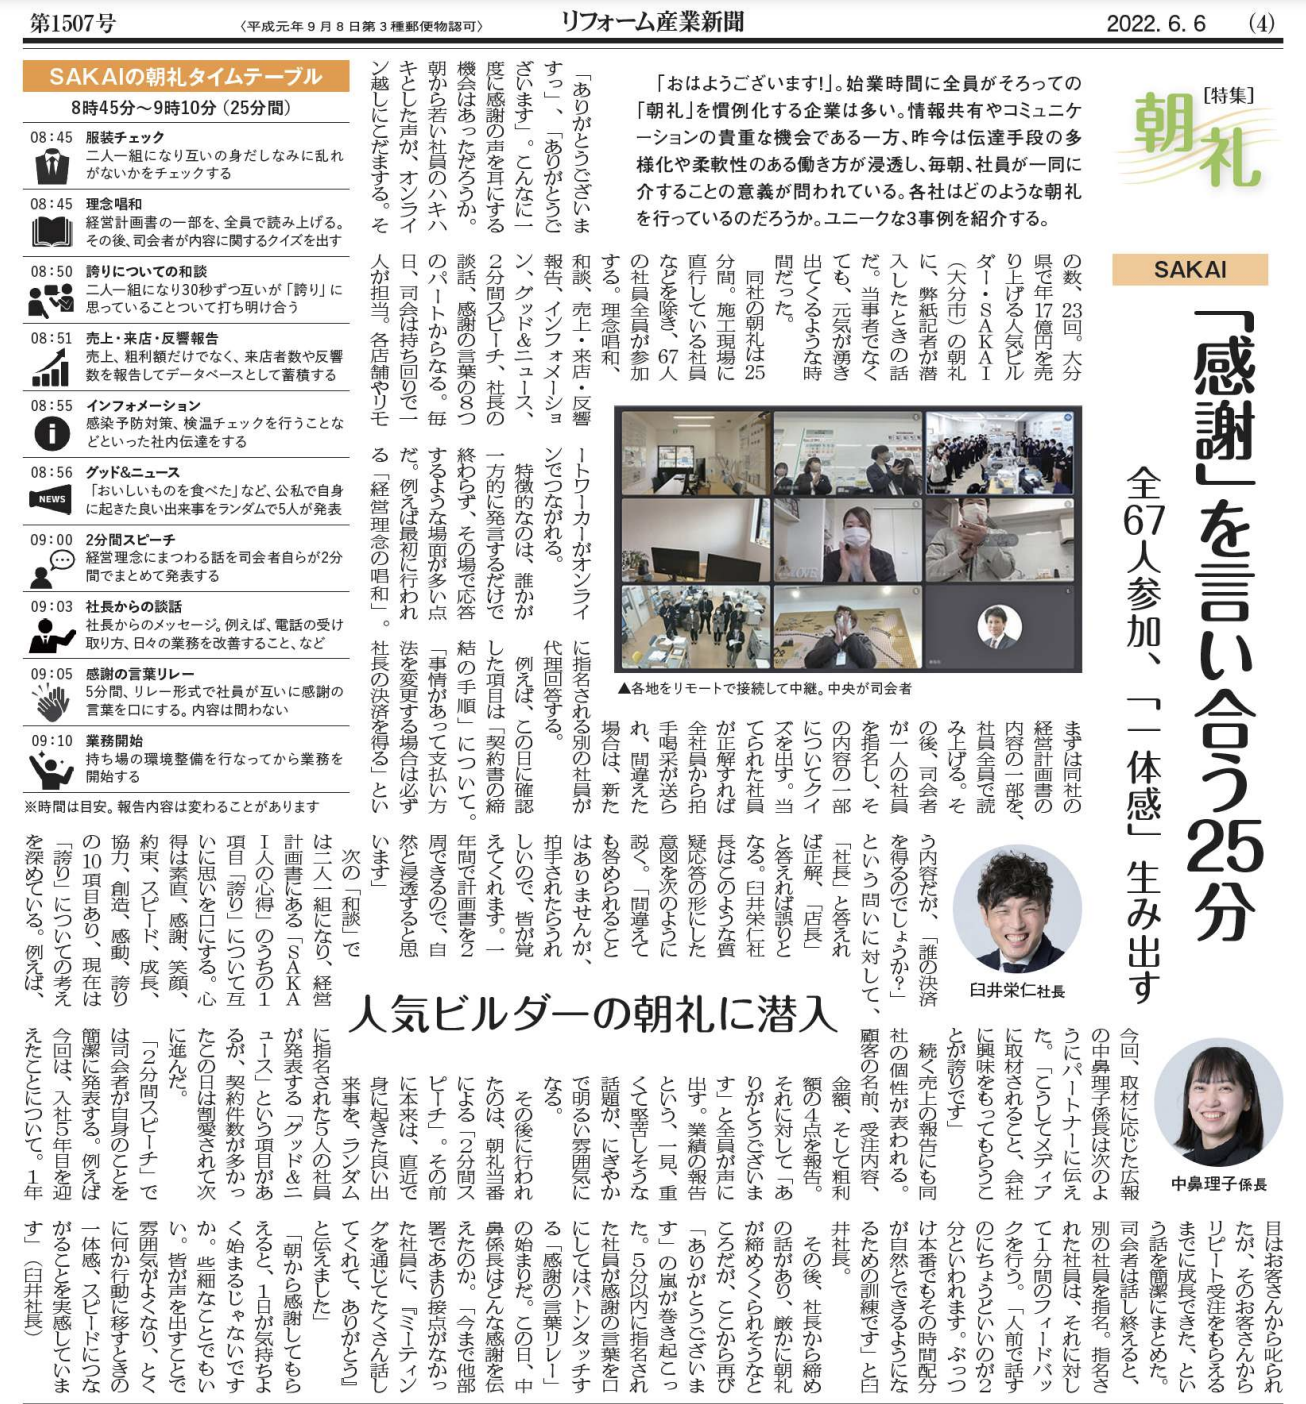 SAKAIの朝礼についてリフォーム産業新聞社に掲載されました！